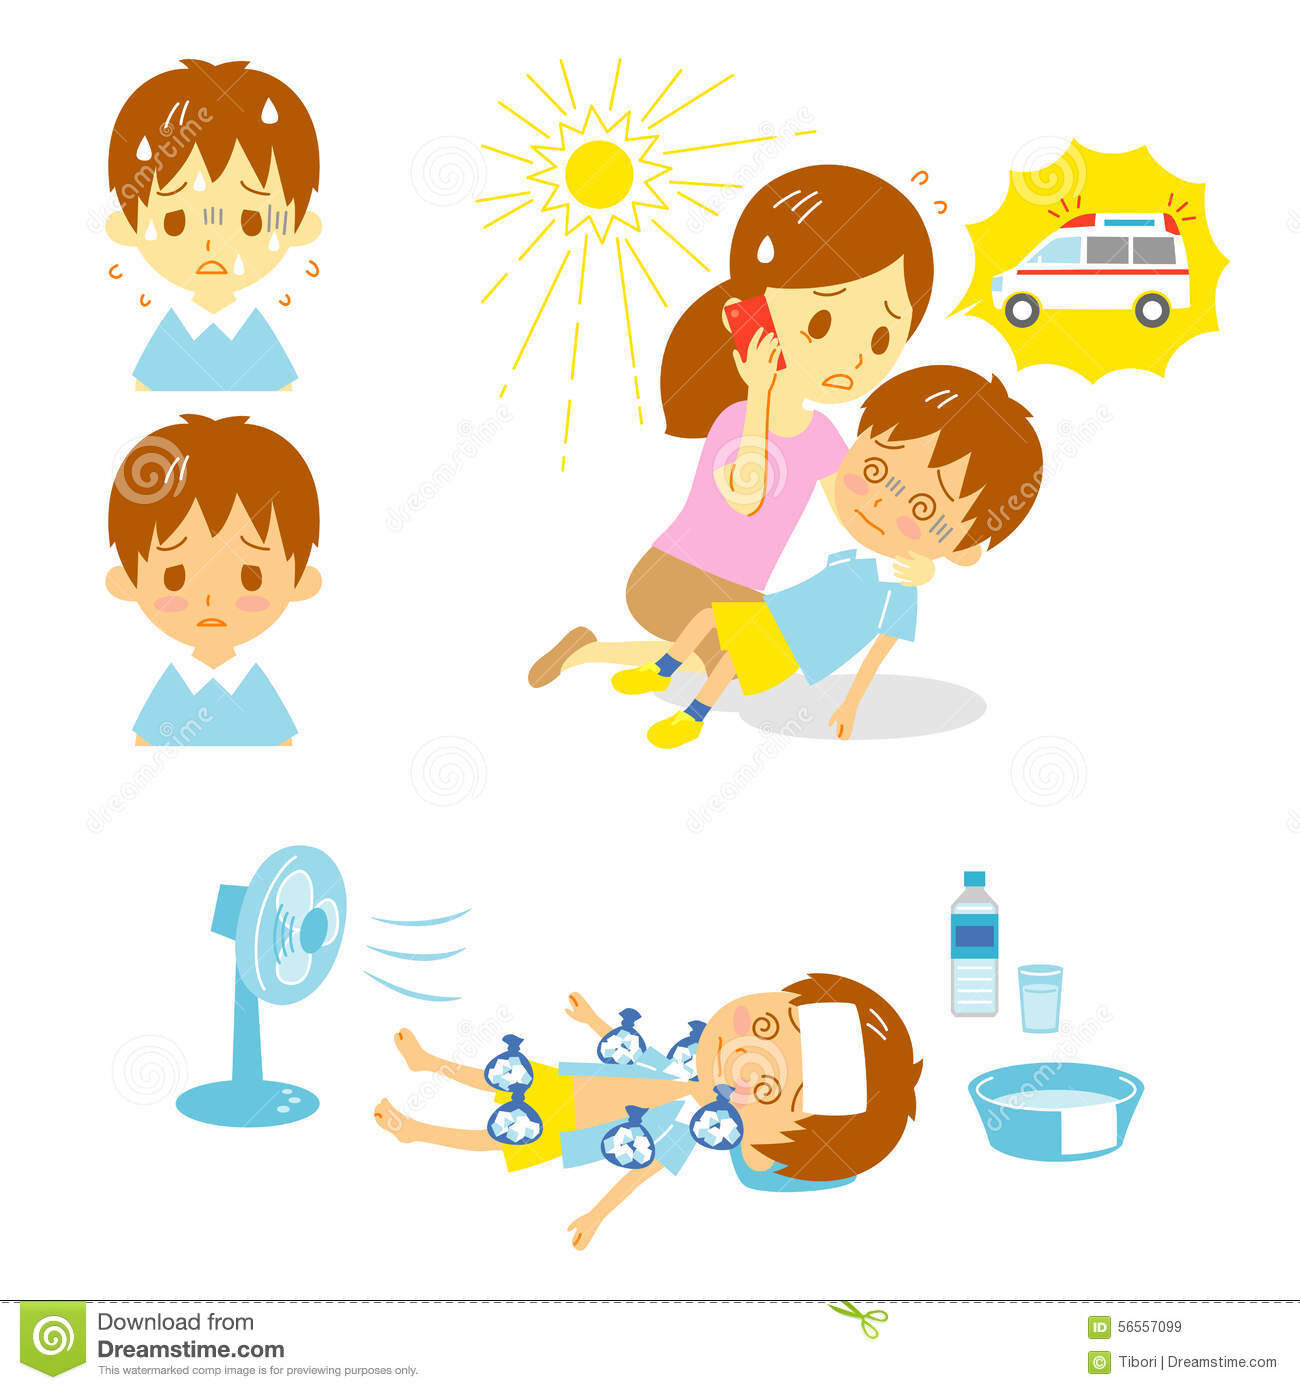 heatstroke-ambulance-first-aid-call-boy-file-56557099-1017043